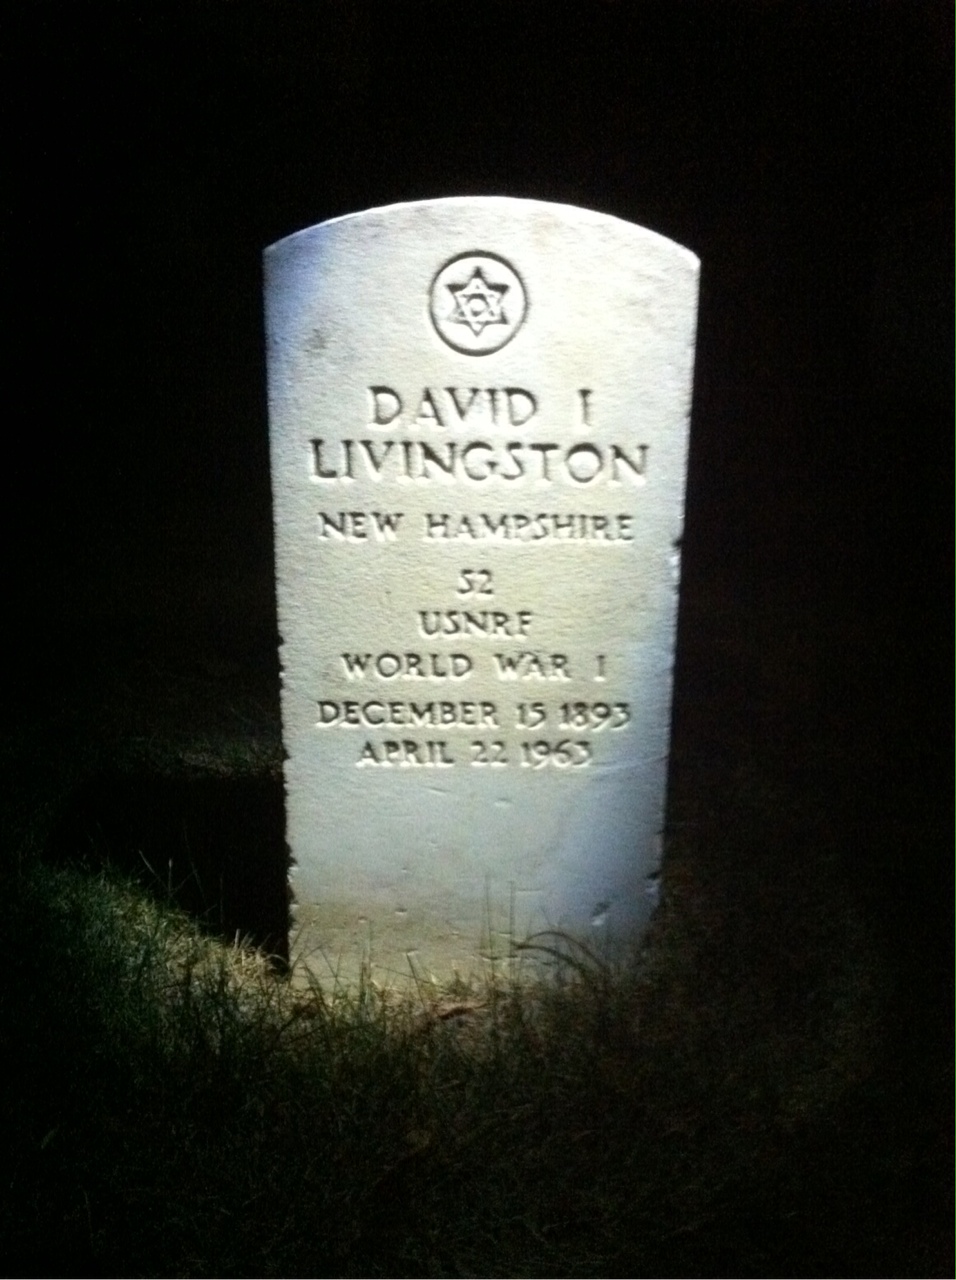 David I Livingston headstone front.jpg